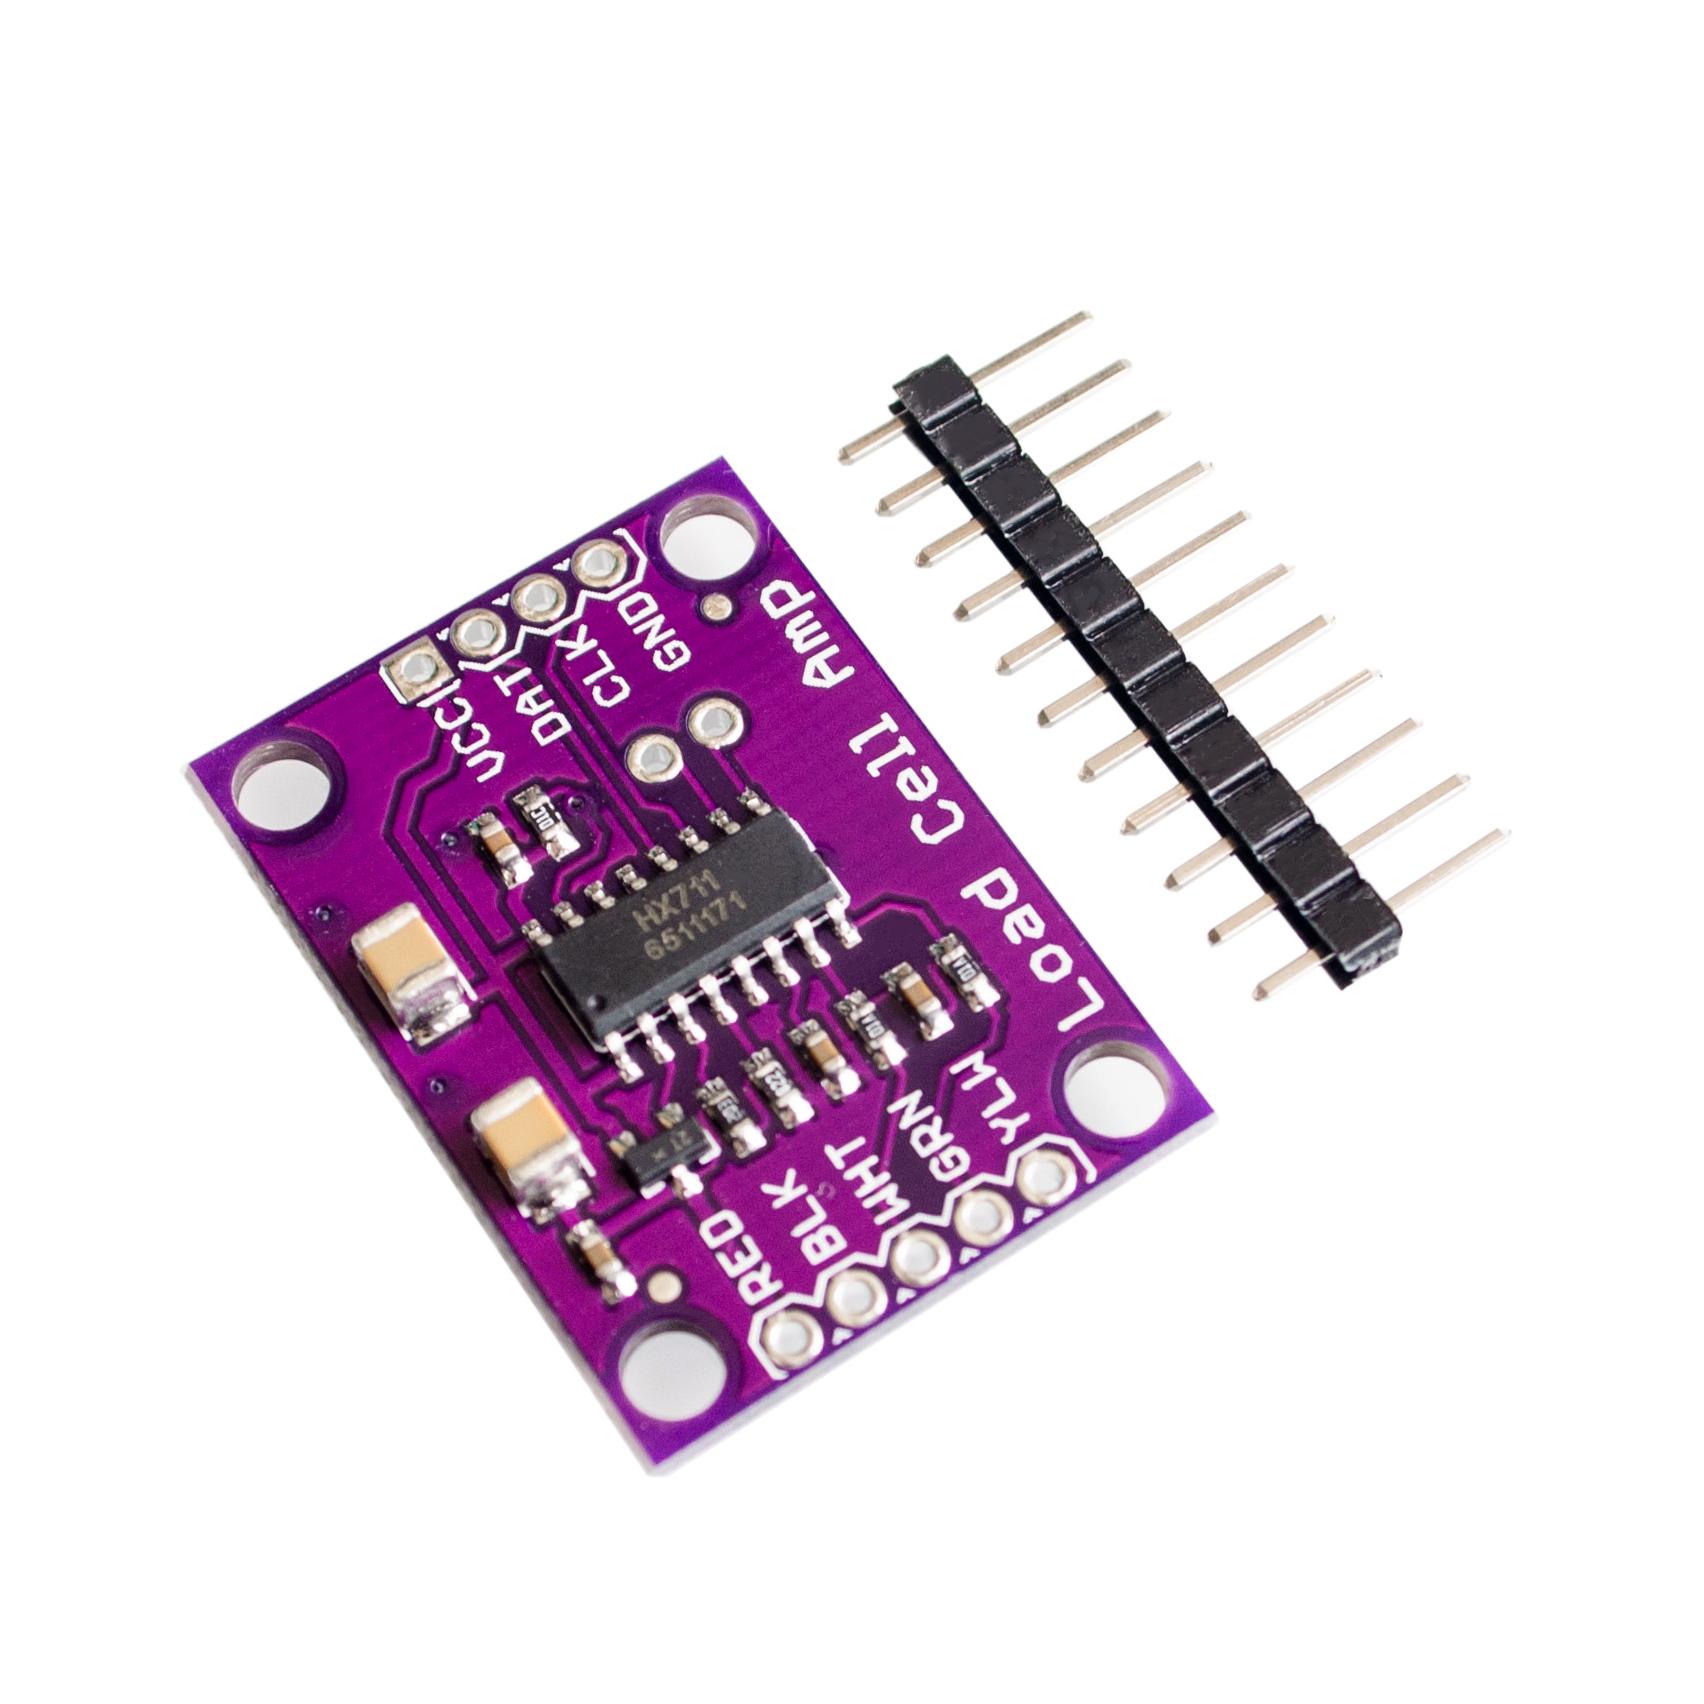 10PCS/LOT HX711 high-precision electronic weighing sensor 24 bit A / D converter board